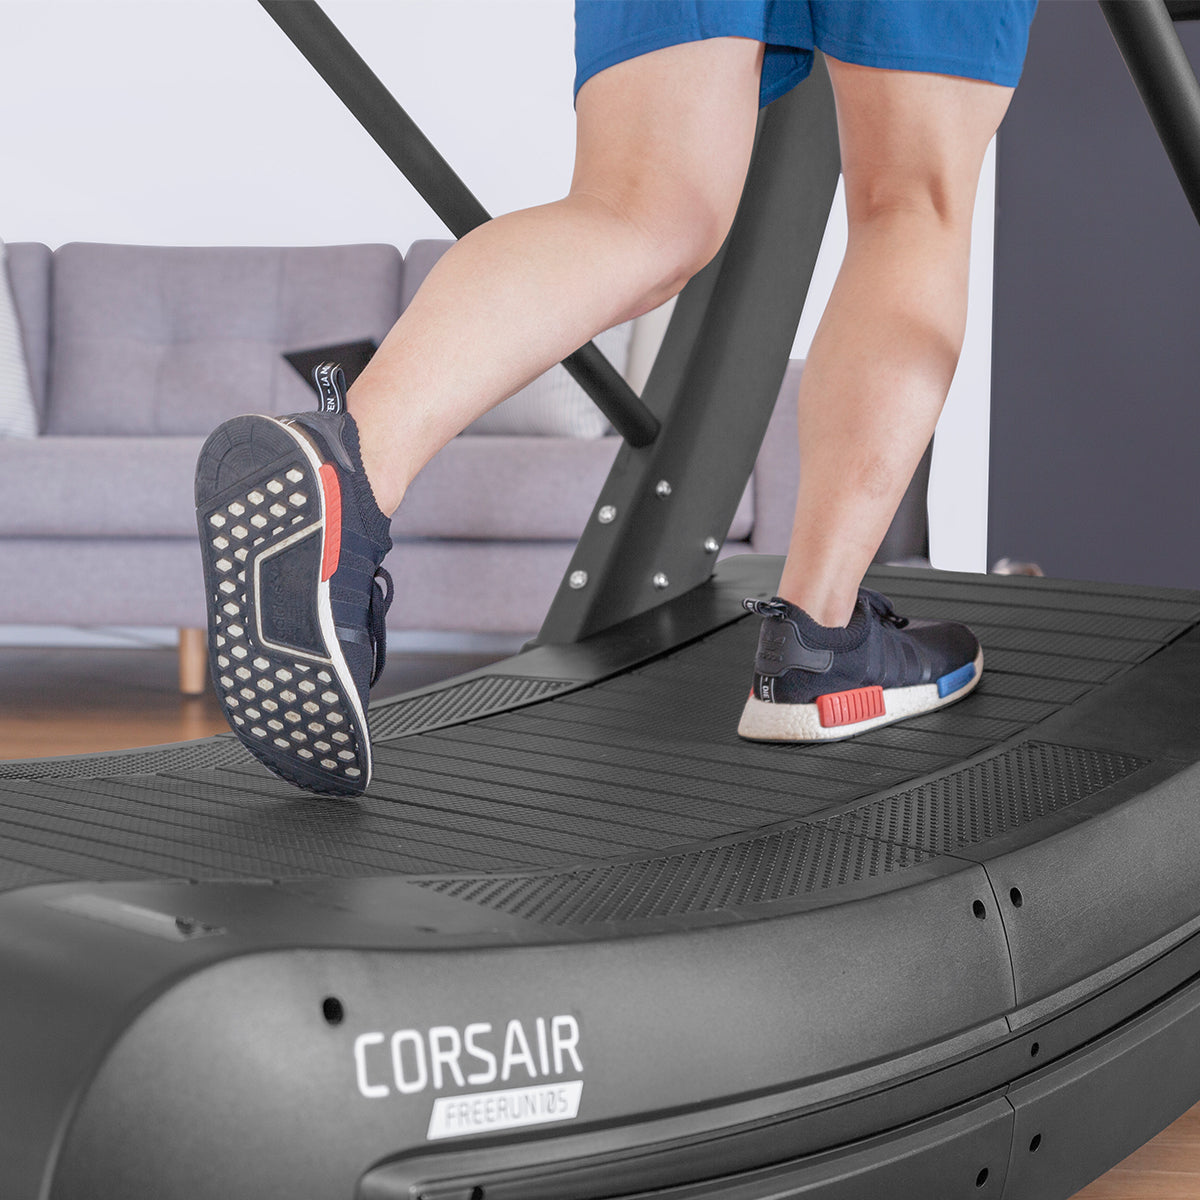 Lifespan Fitness Corsair FreeRun 105 Curved Treadmill